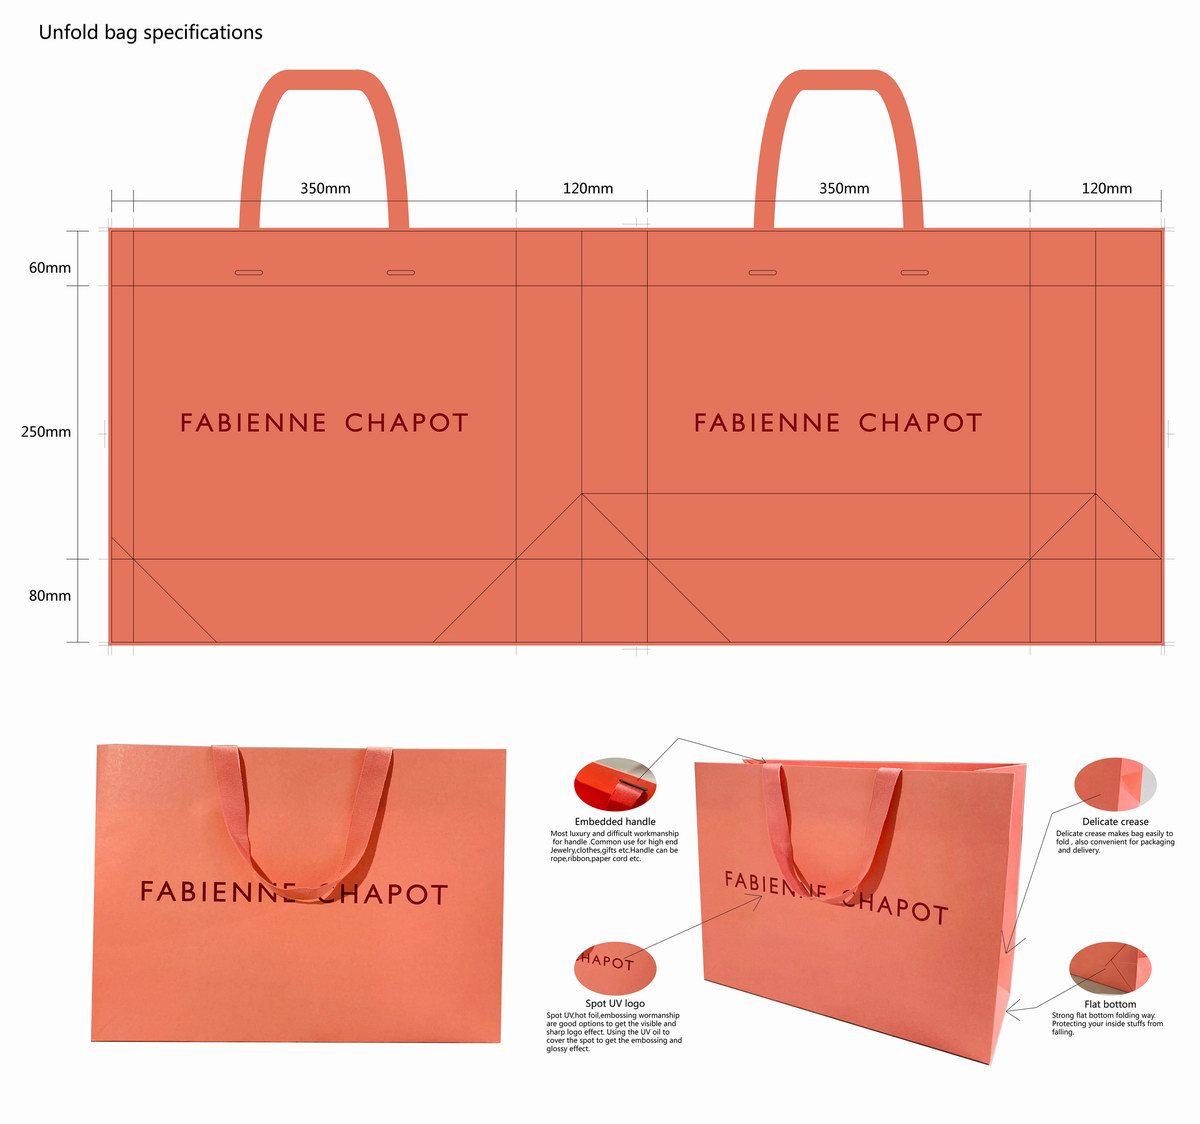 Unfold bag specifications.jpg